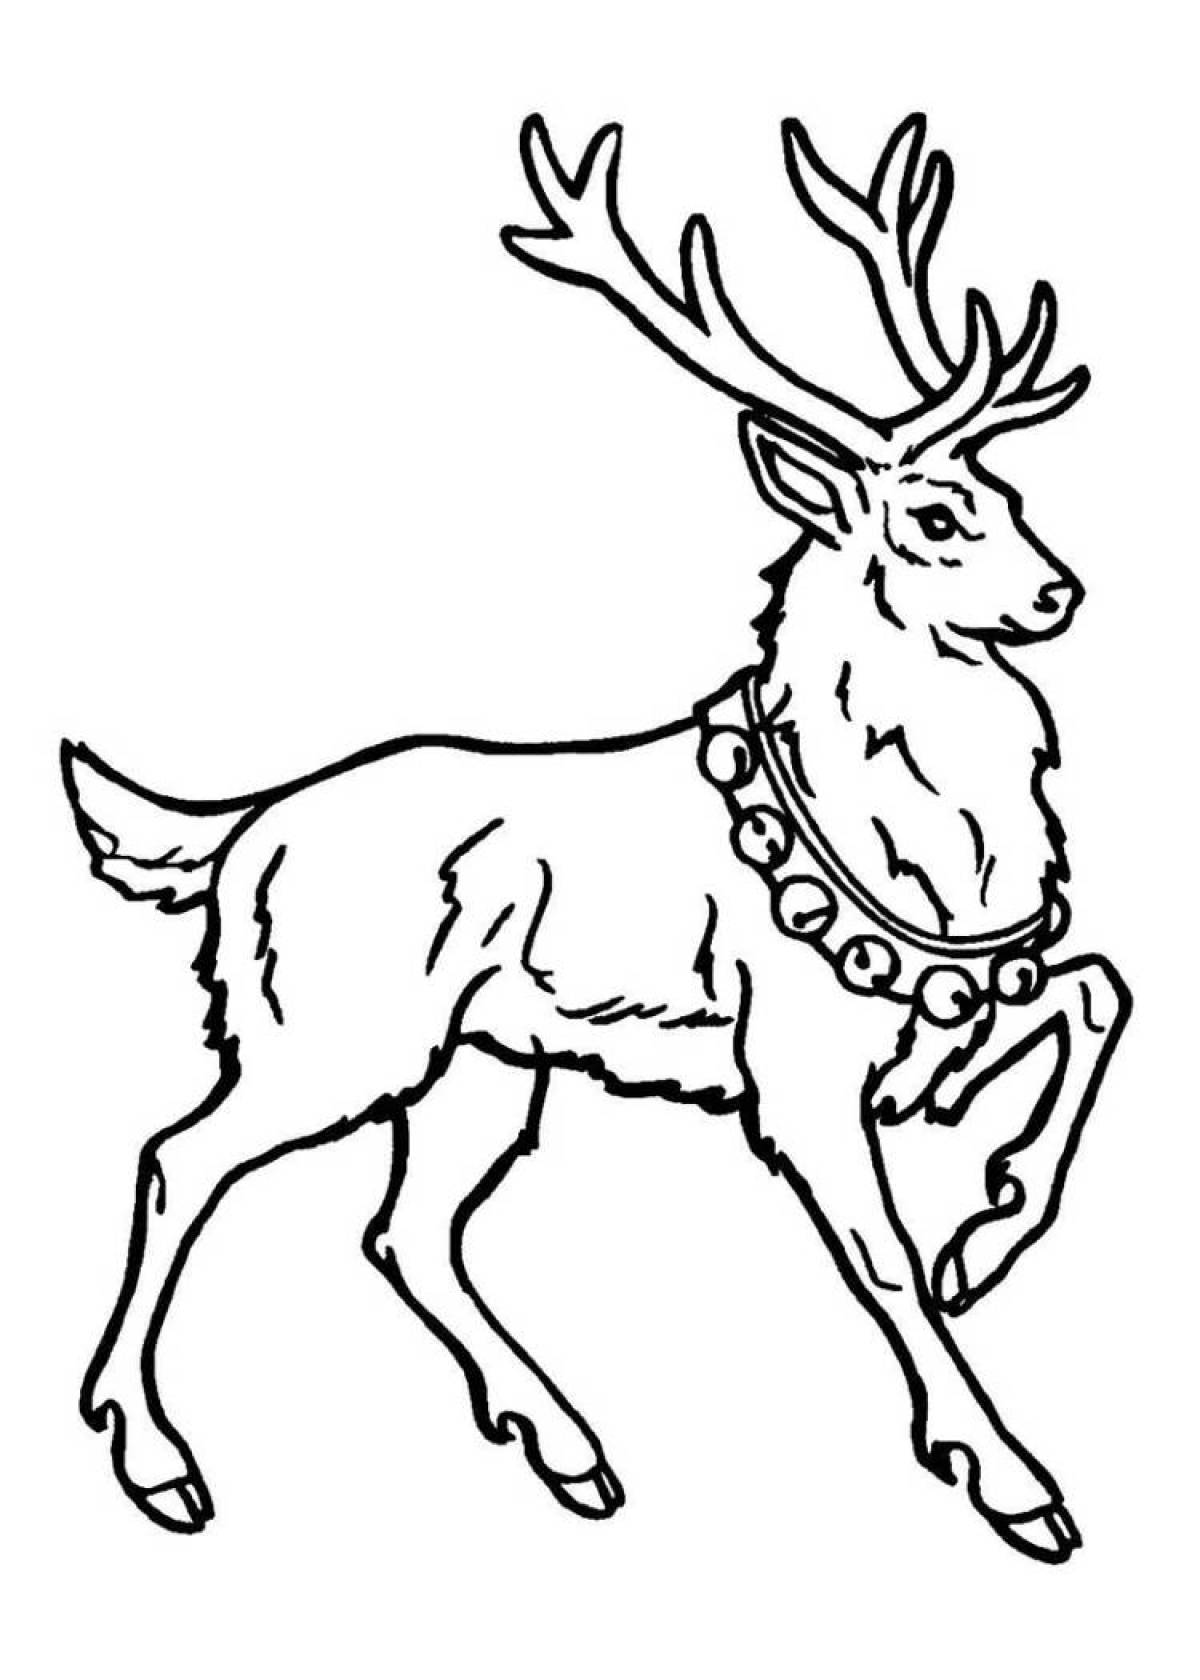 Magic Christmas deer coloring page